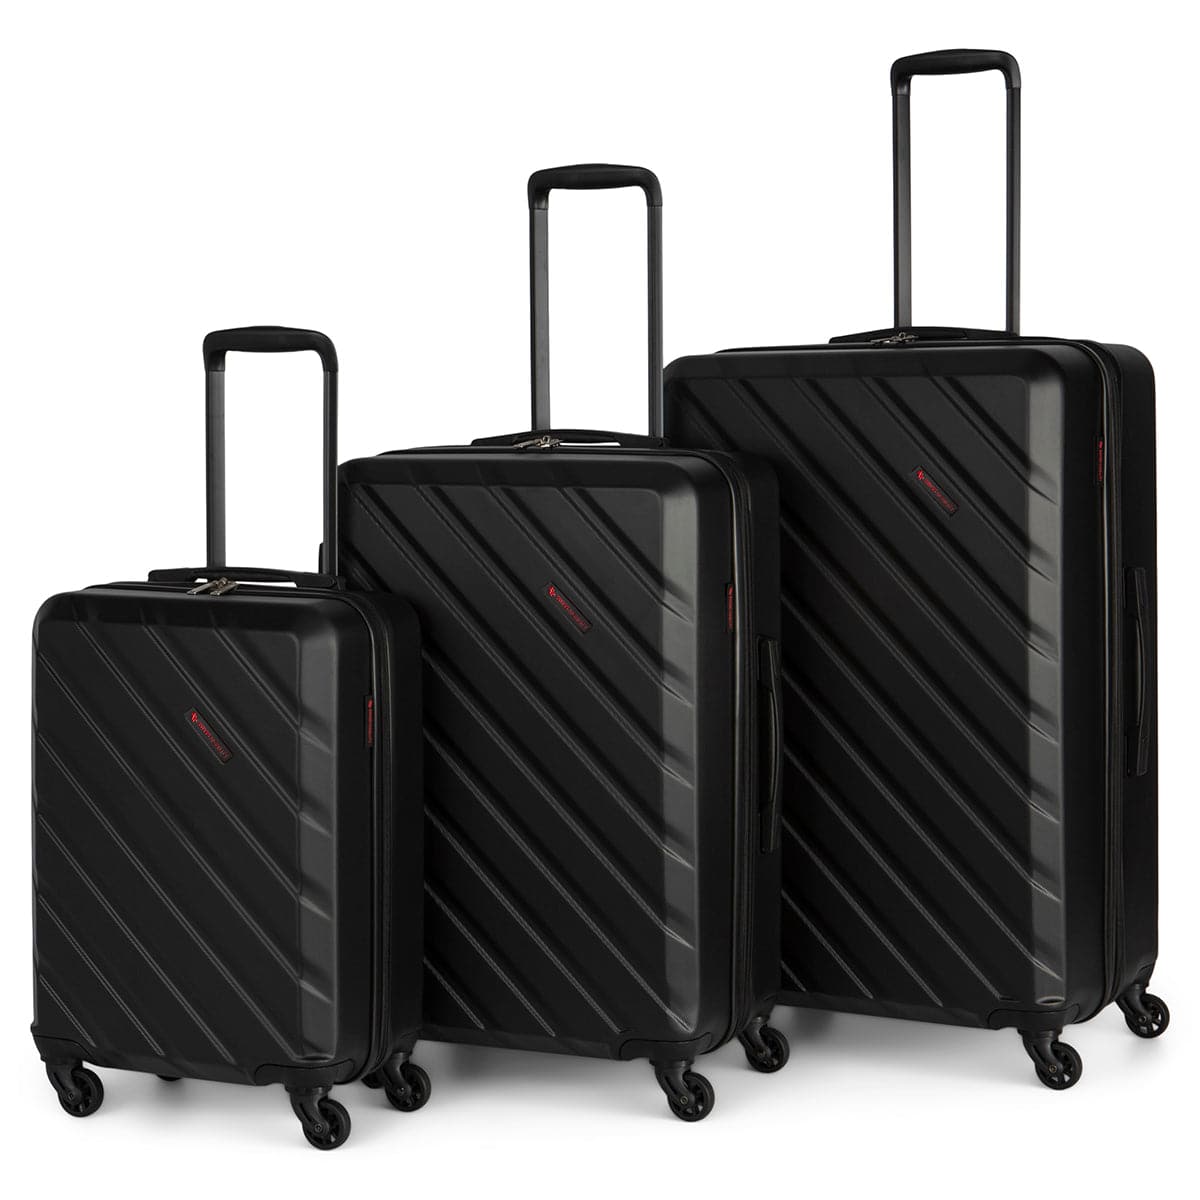 Swiss Mobility AHB 3 Piece Luggage Set